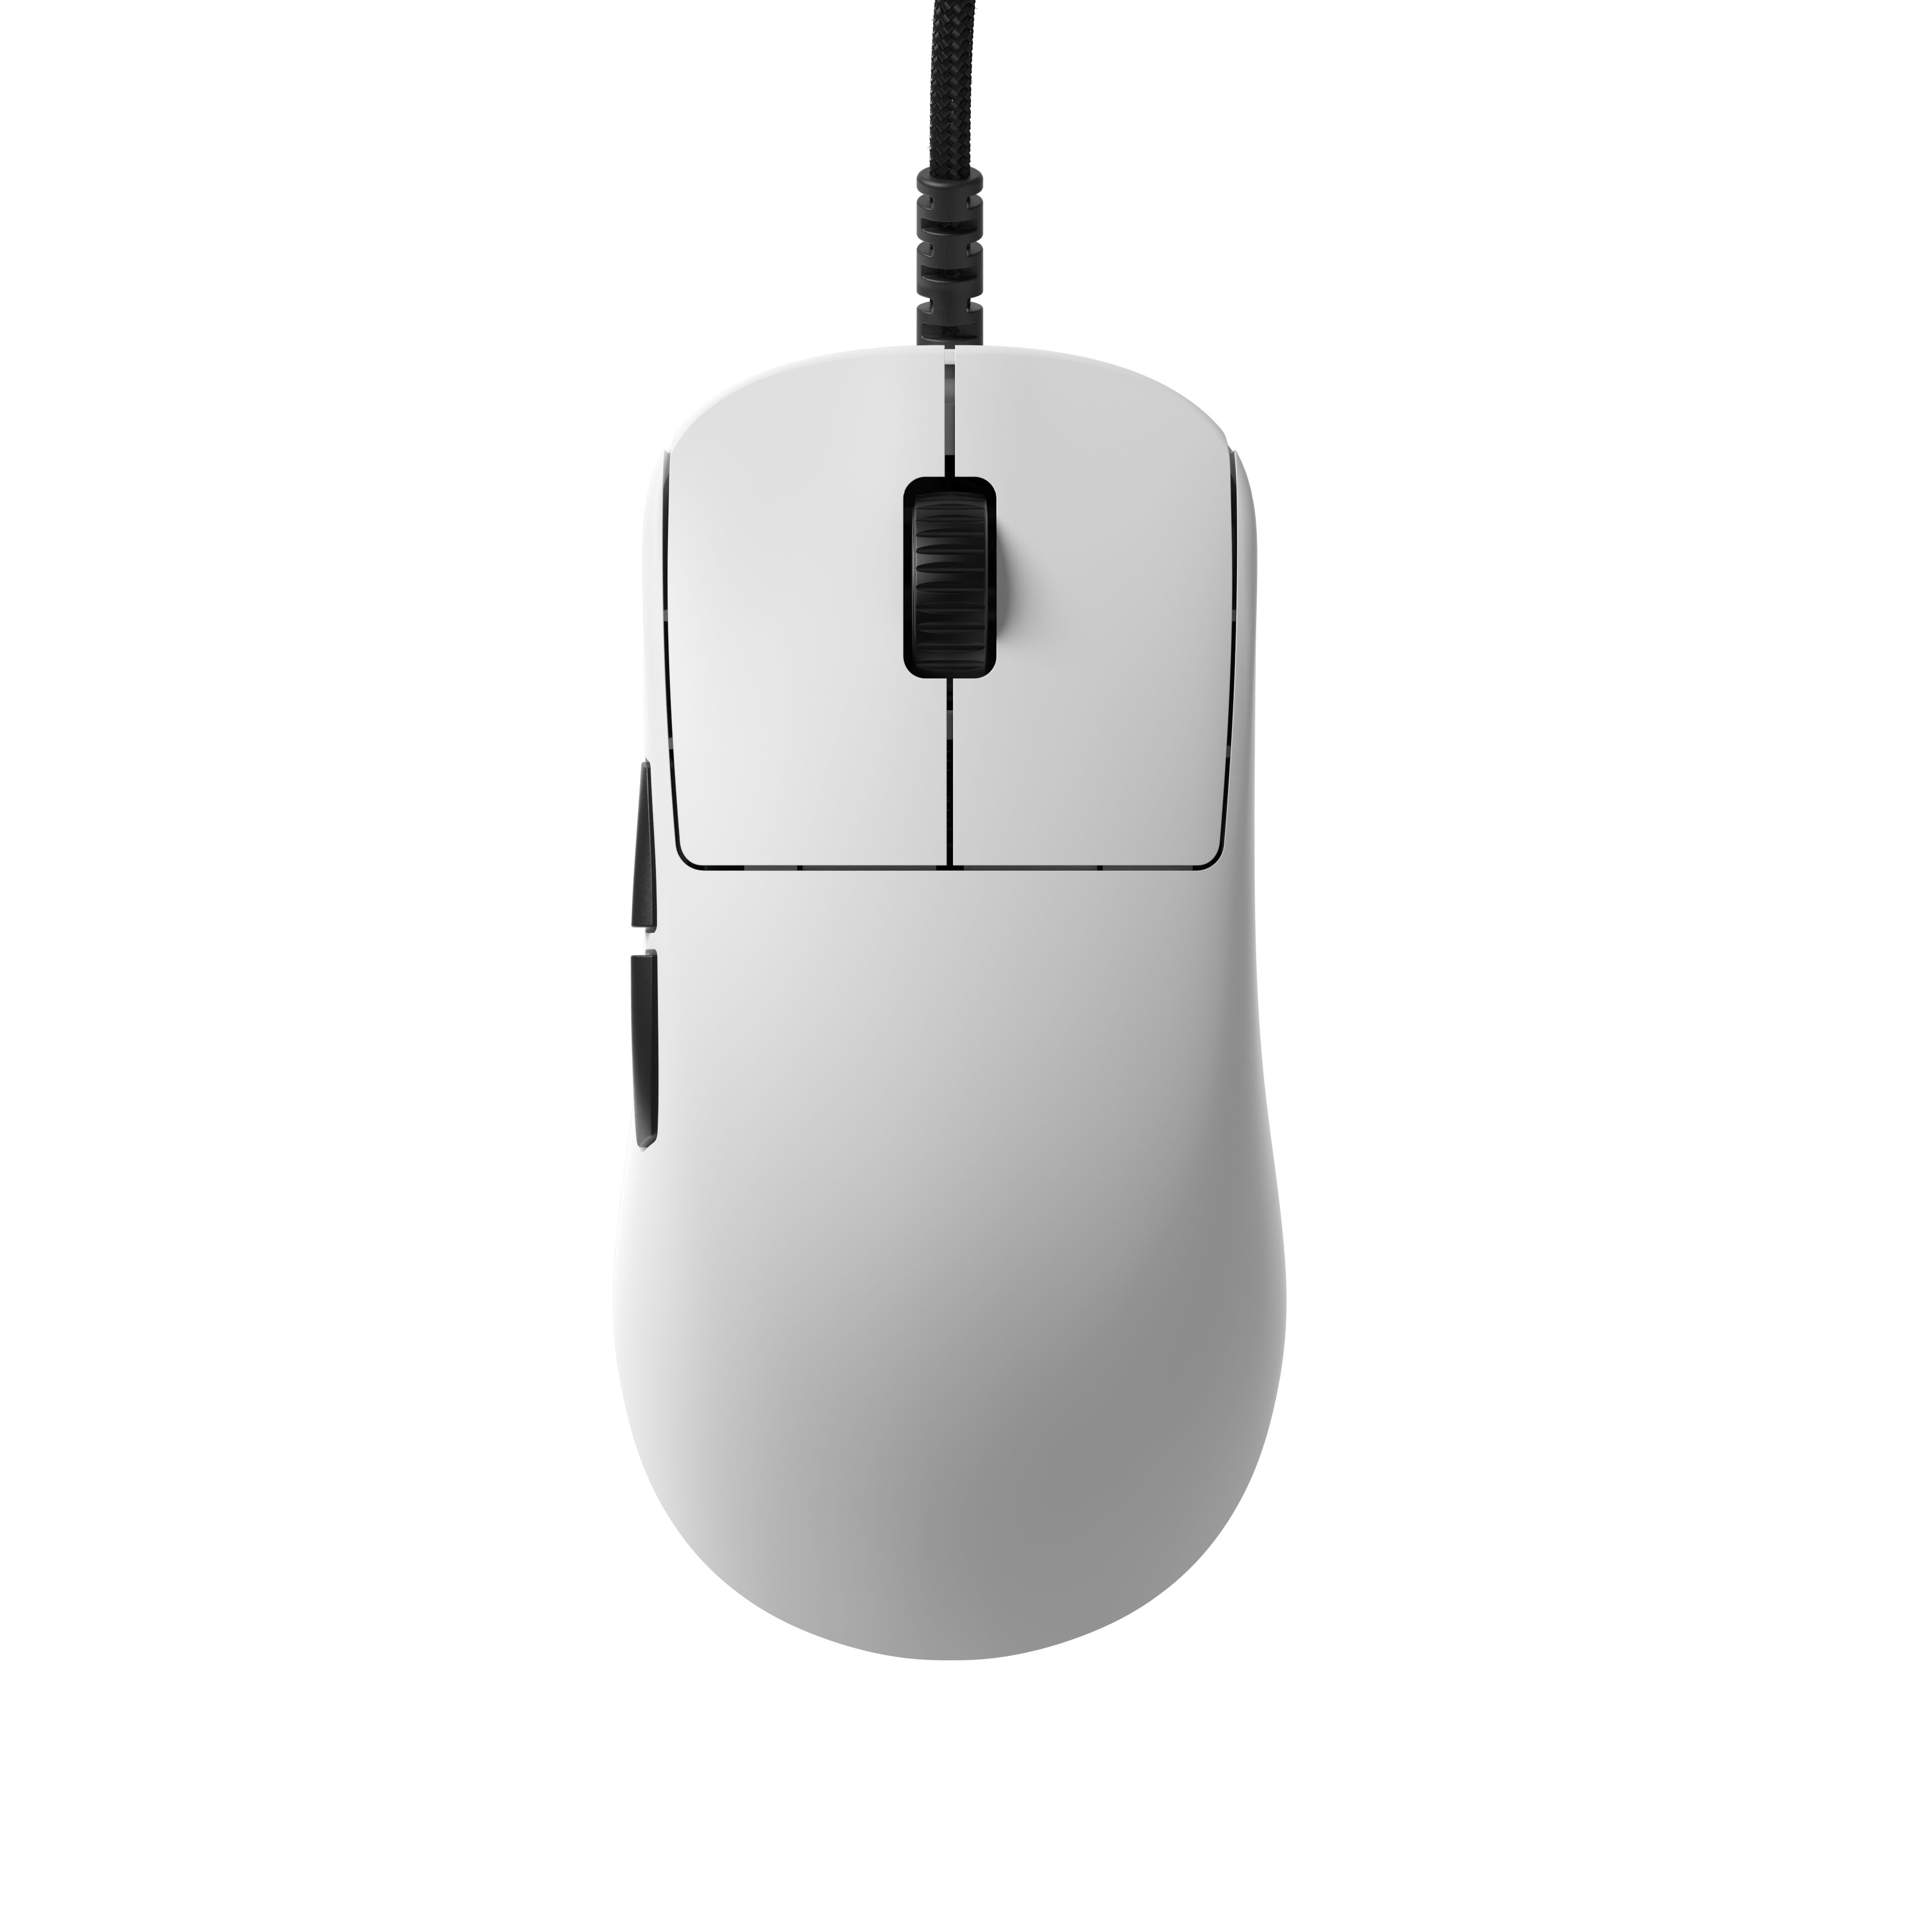 EndgameGearEndgame Gear OP1 8k Gaming Mouse - White - マウス ...